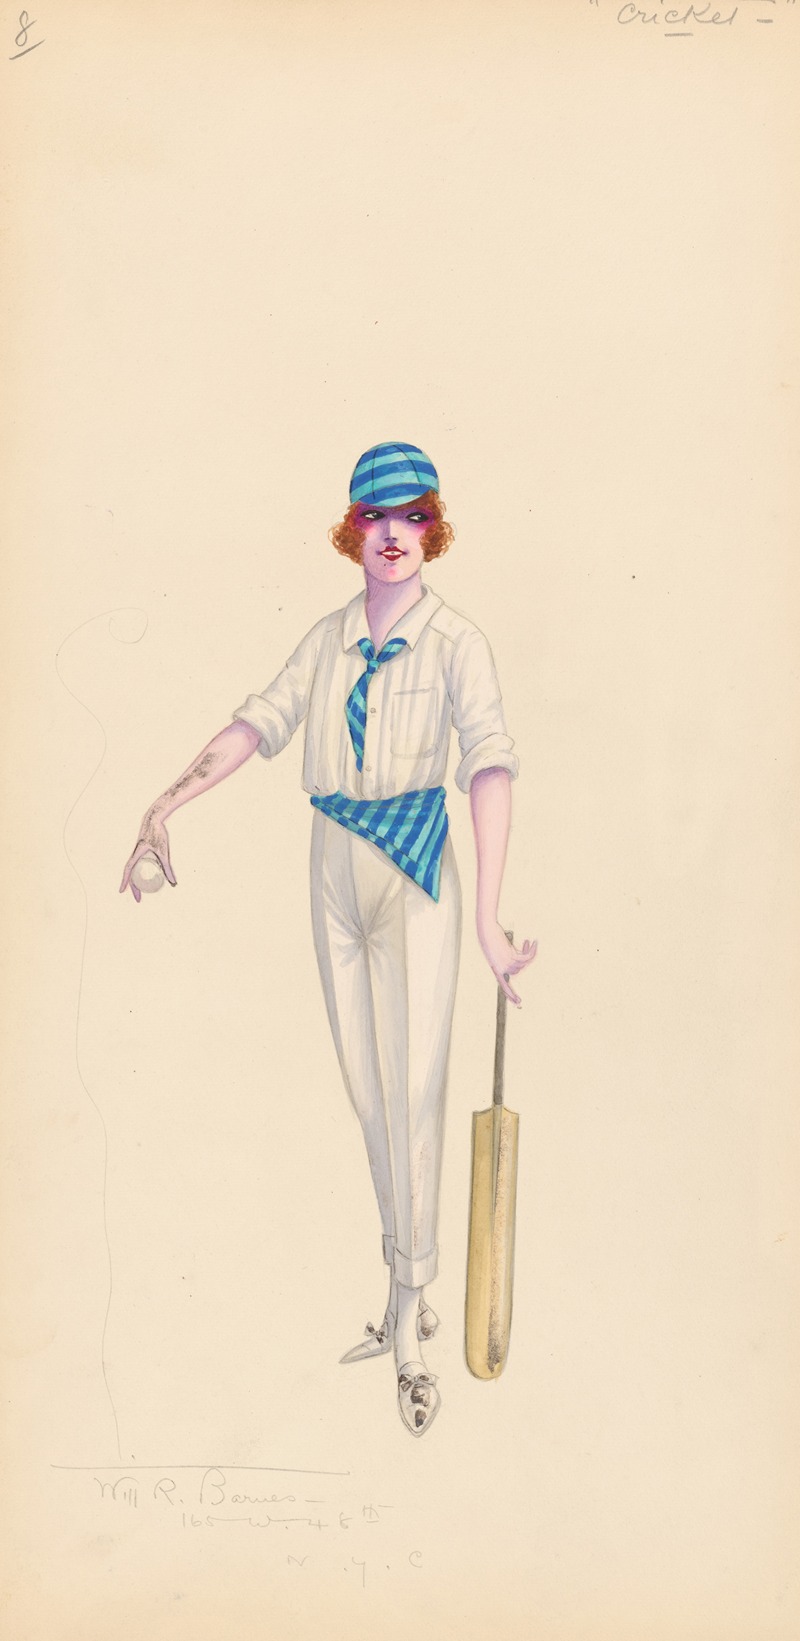 Will R. Barnes - Cricket, 8